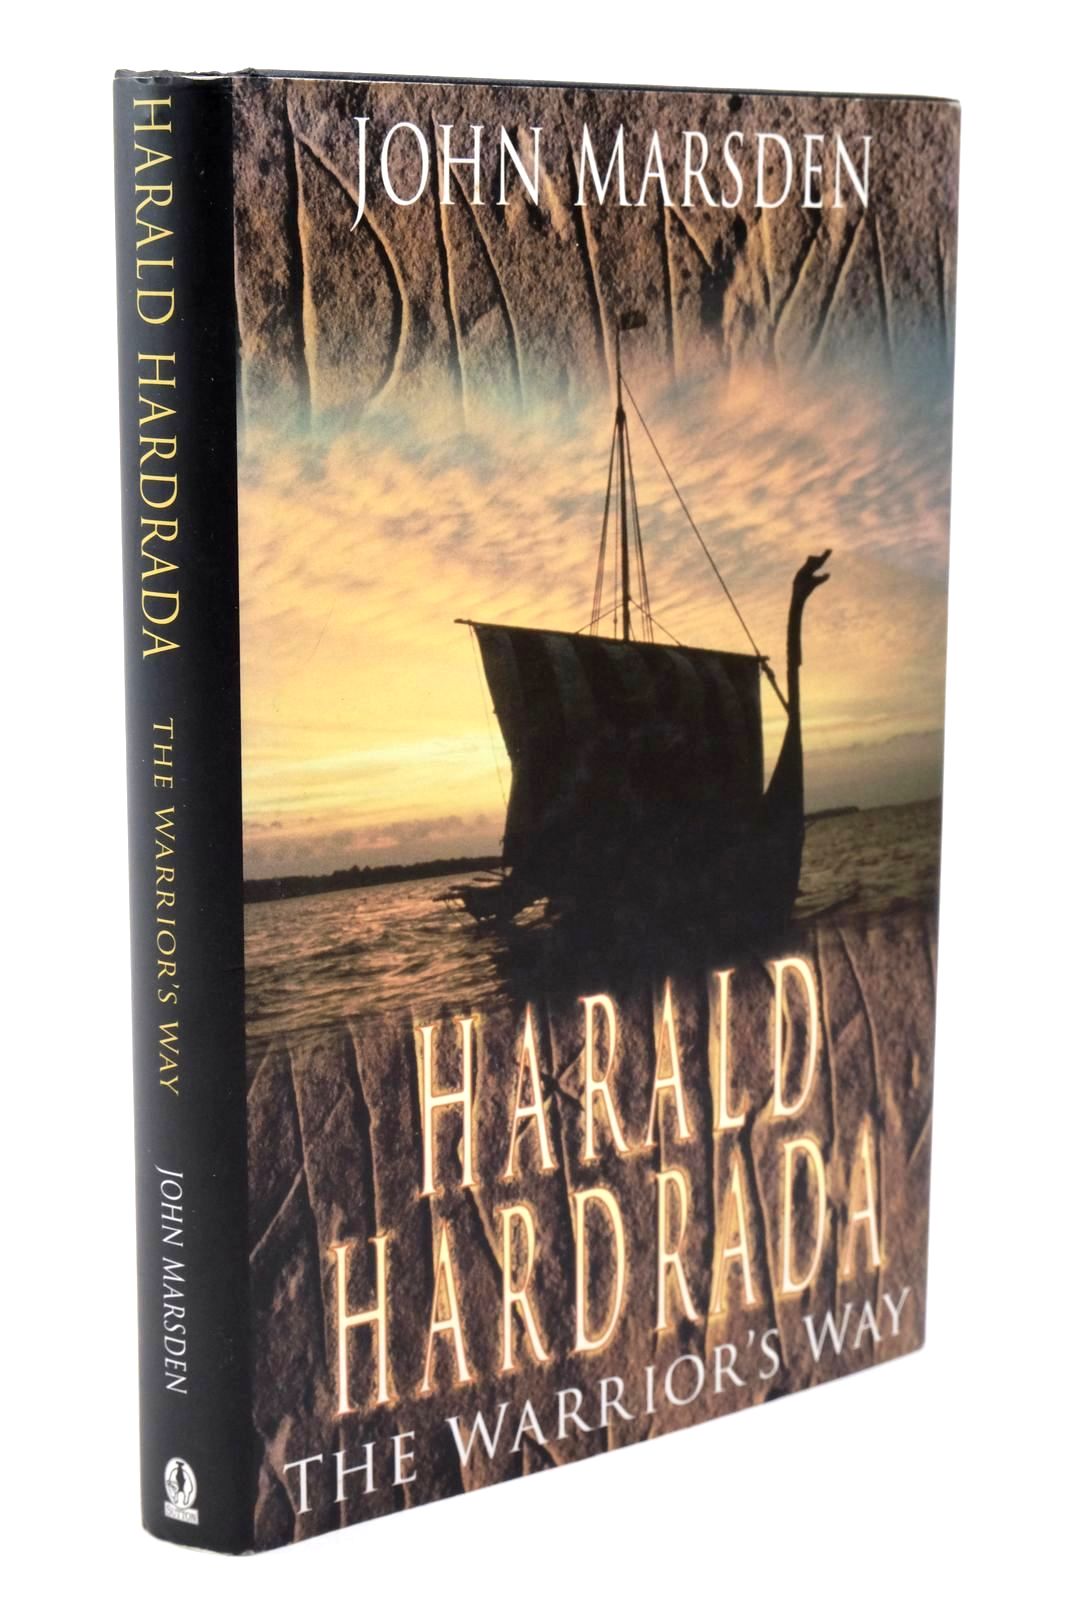 Photo of HARALD HARDRADA THE WARRIOR'S WAY- Stock Number: 1322547